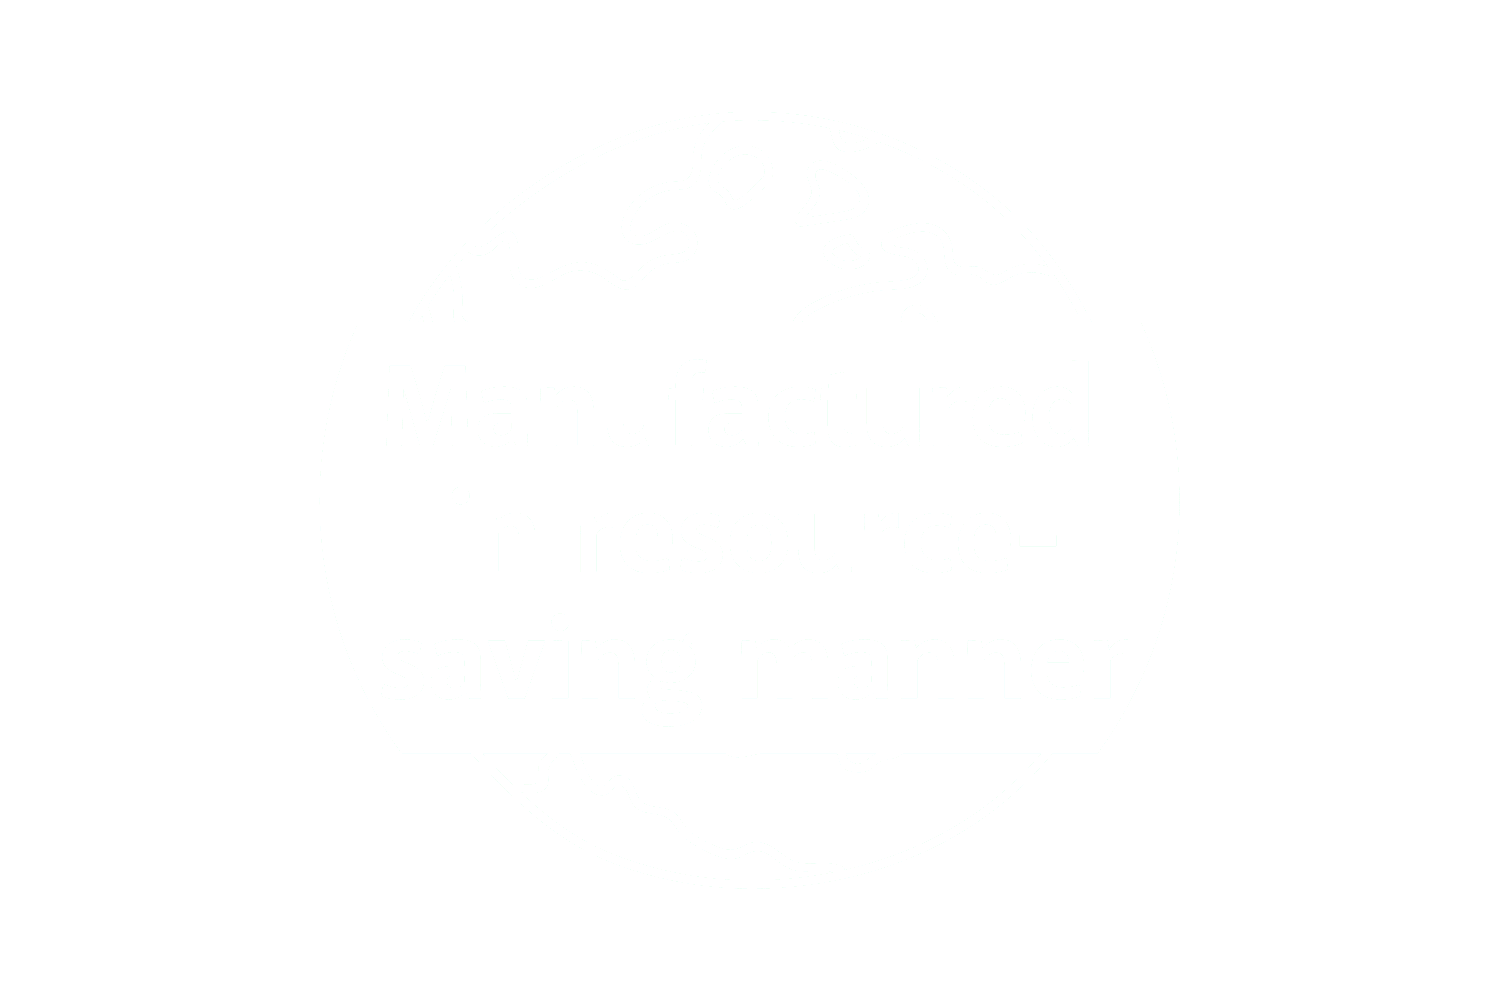 Manufactured in resource-saving manner